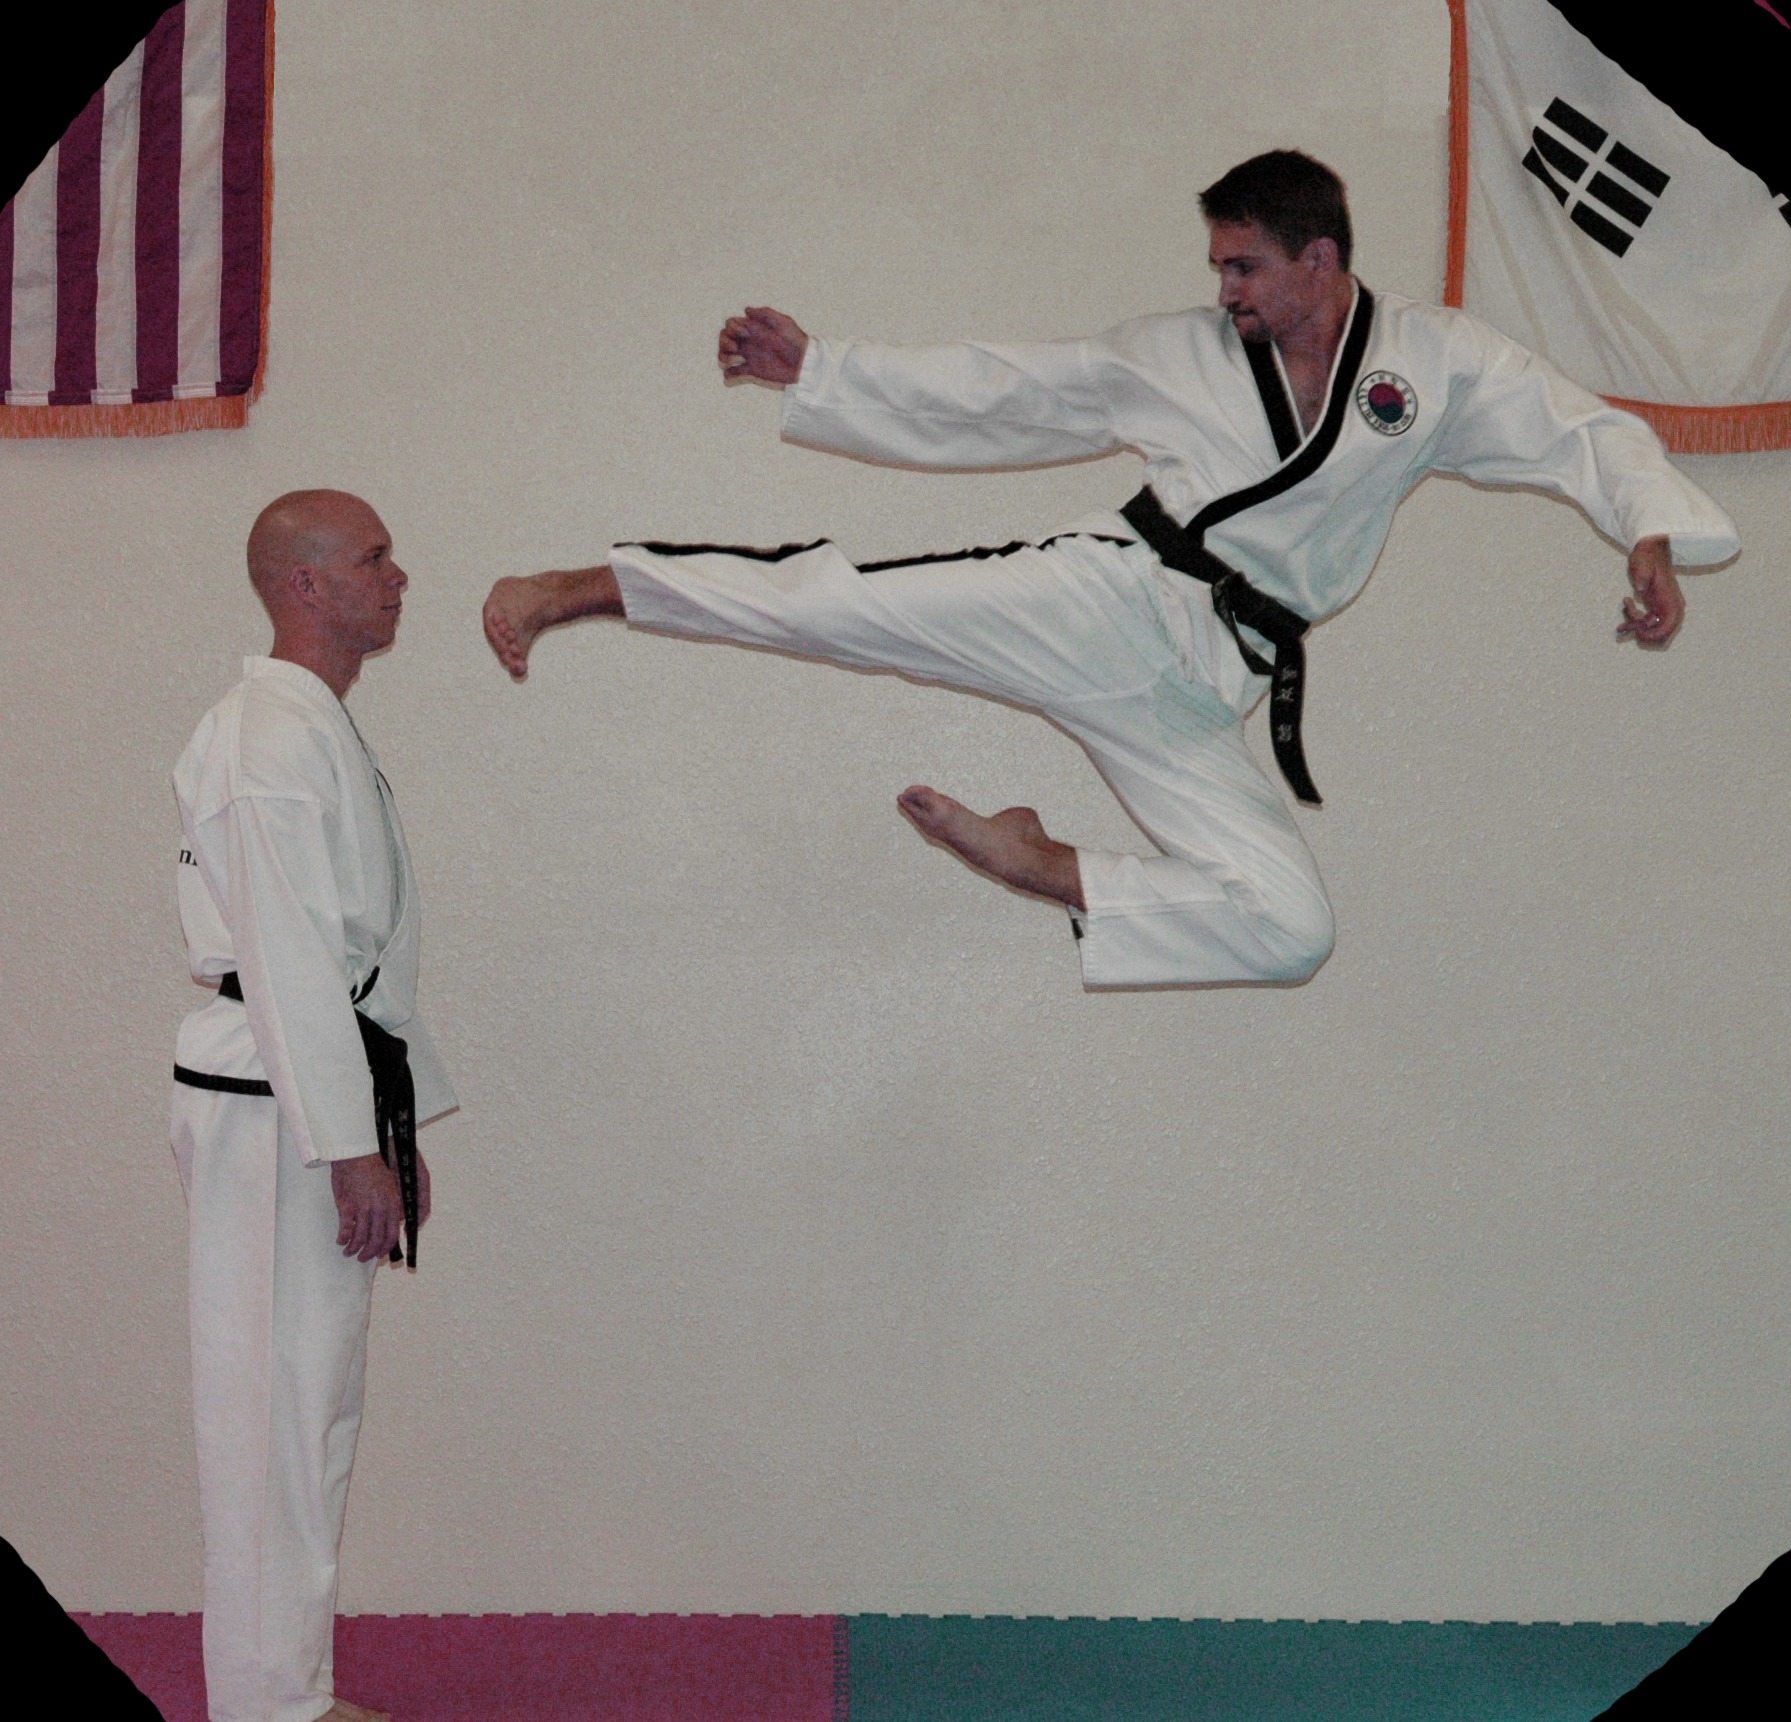 jump side kick taekwondo